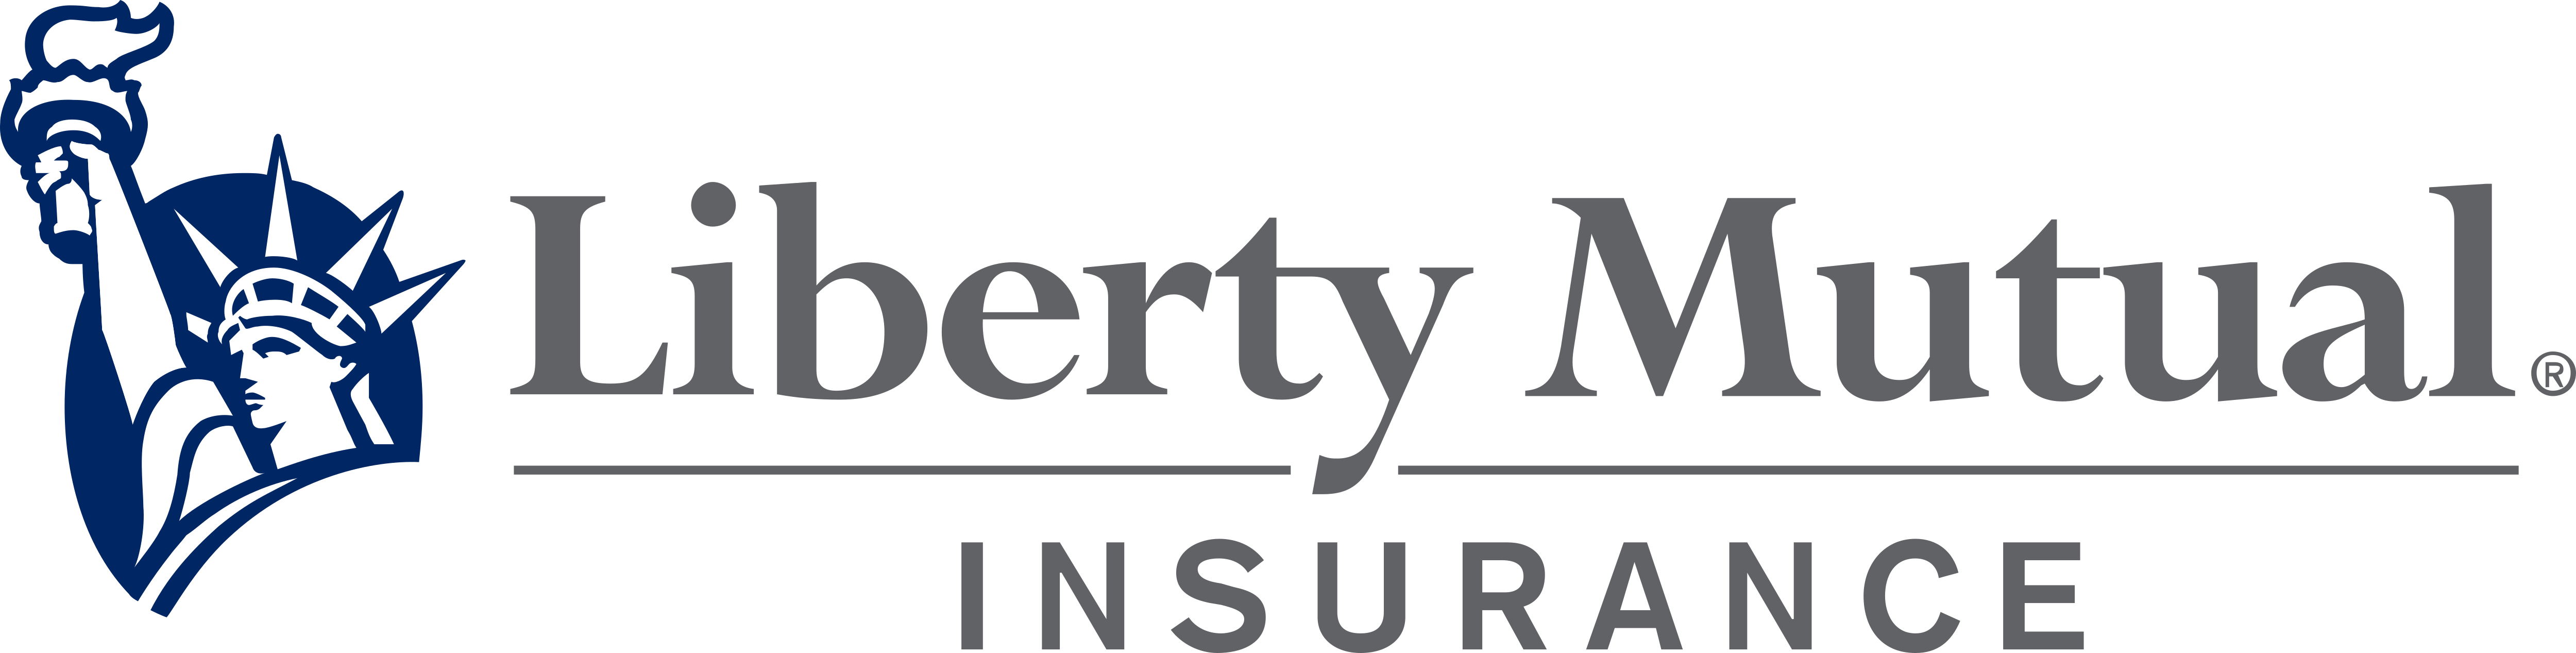 Liberty Mutual Logos Download